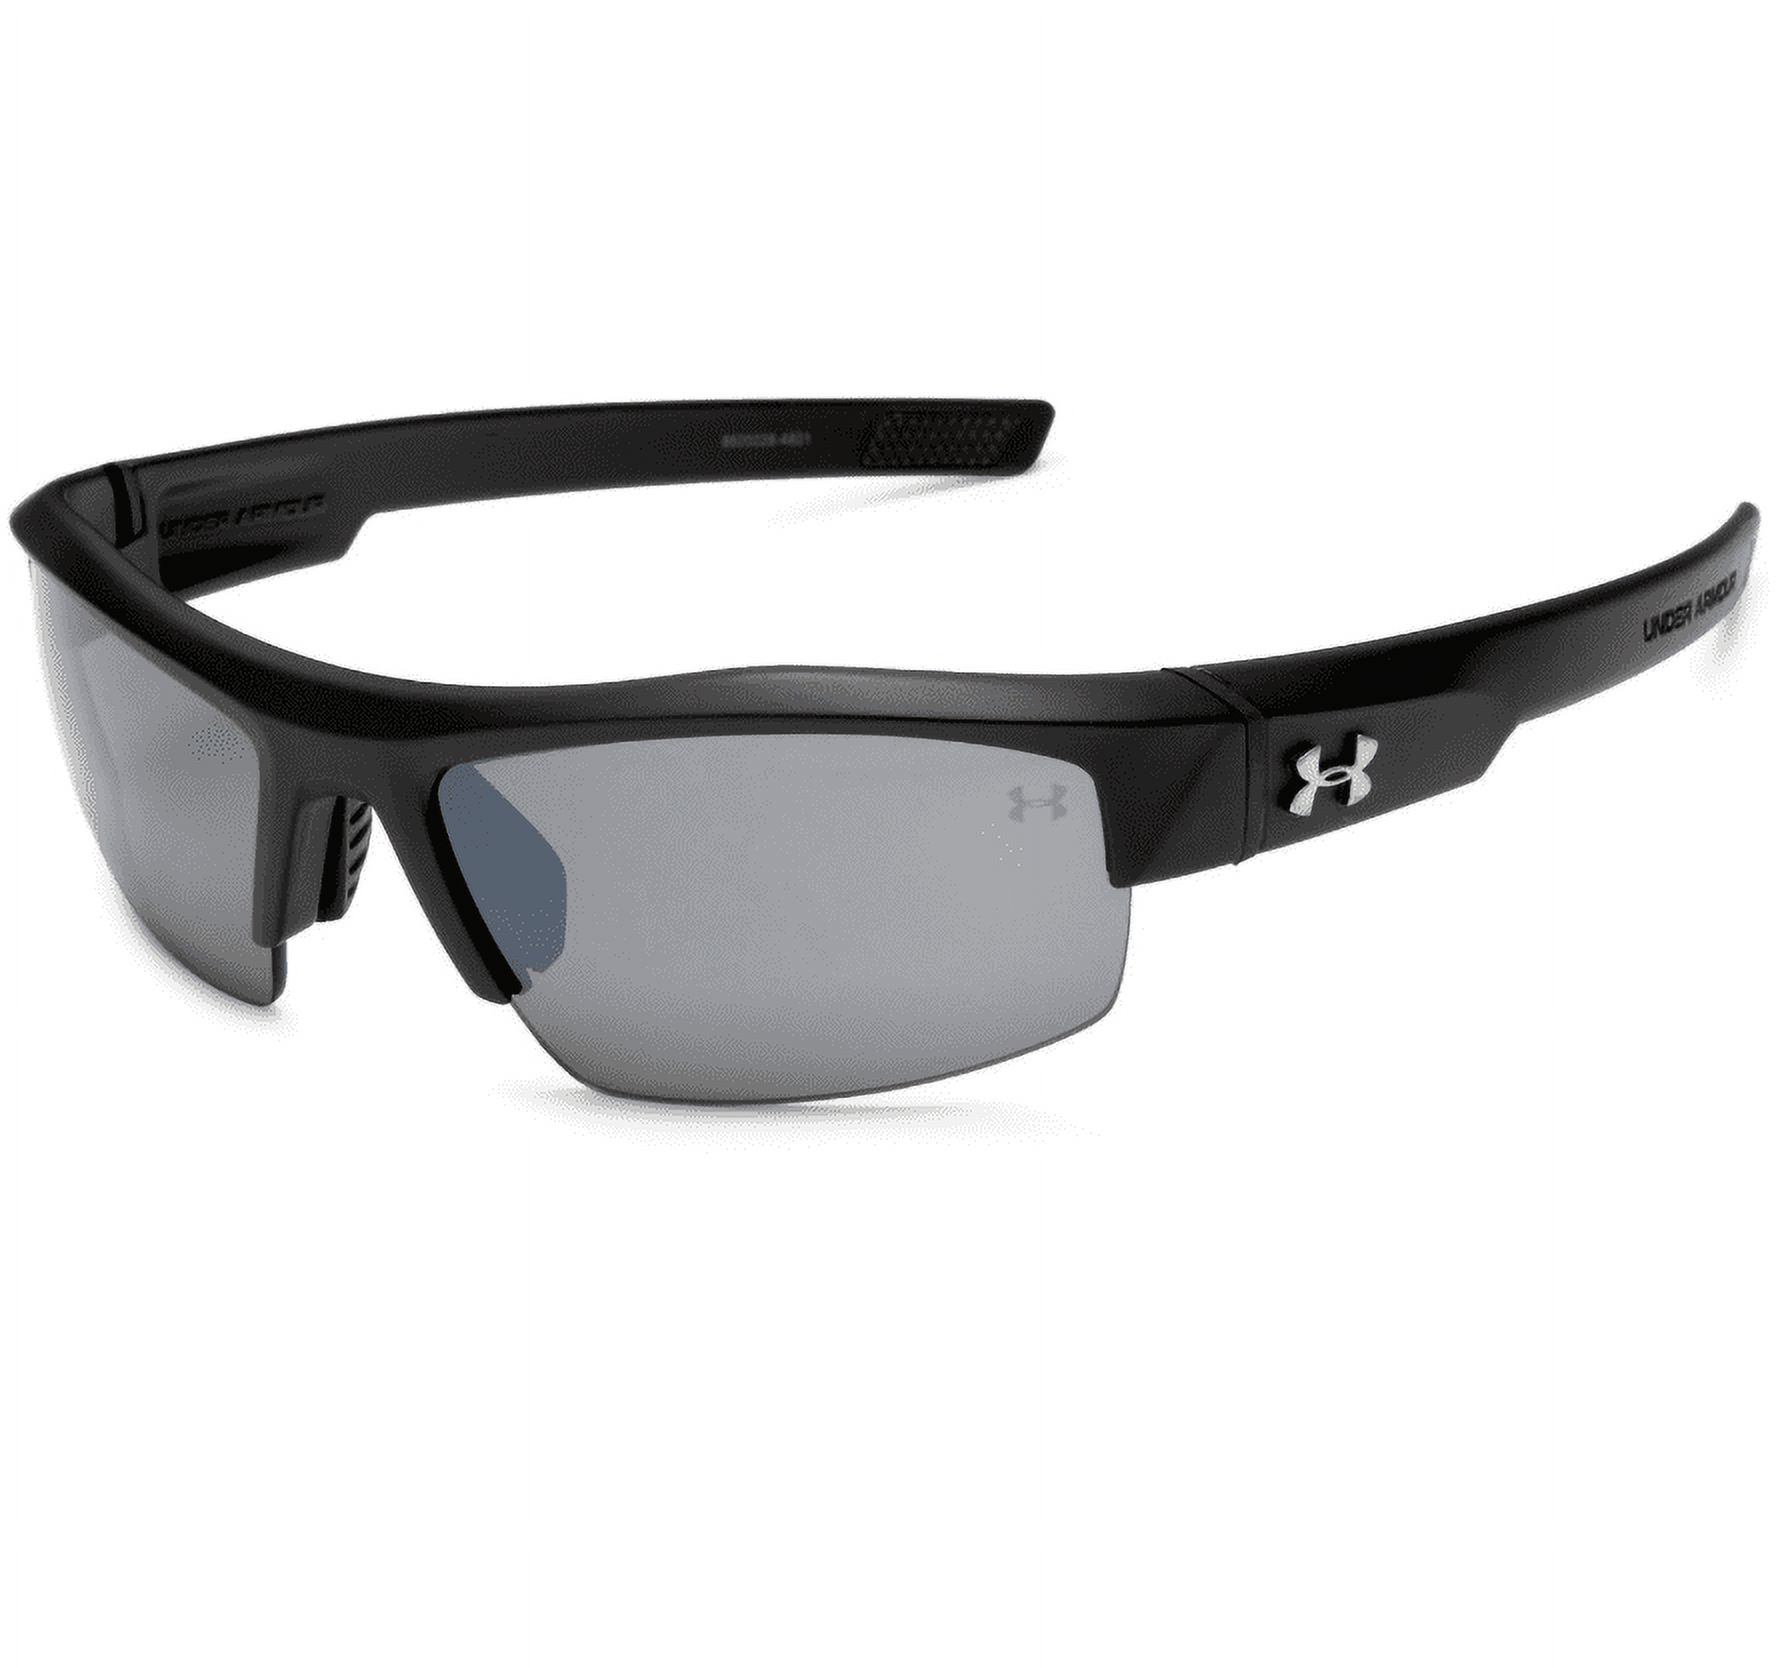 Under Armour UA Igniter Satin Black Frame Gray Mirror Lens Men's Sport Sunglasses - image 1 of 4